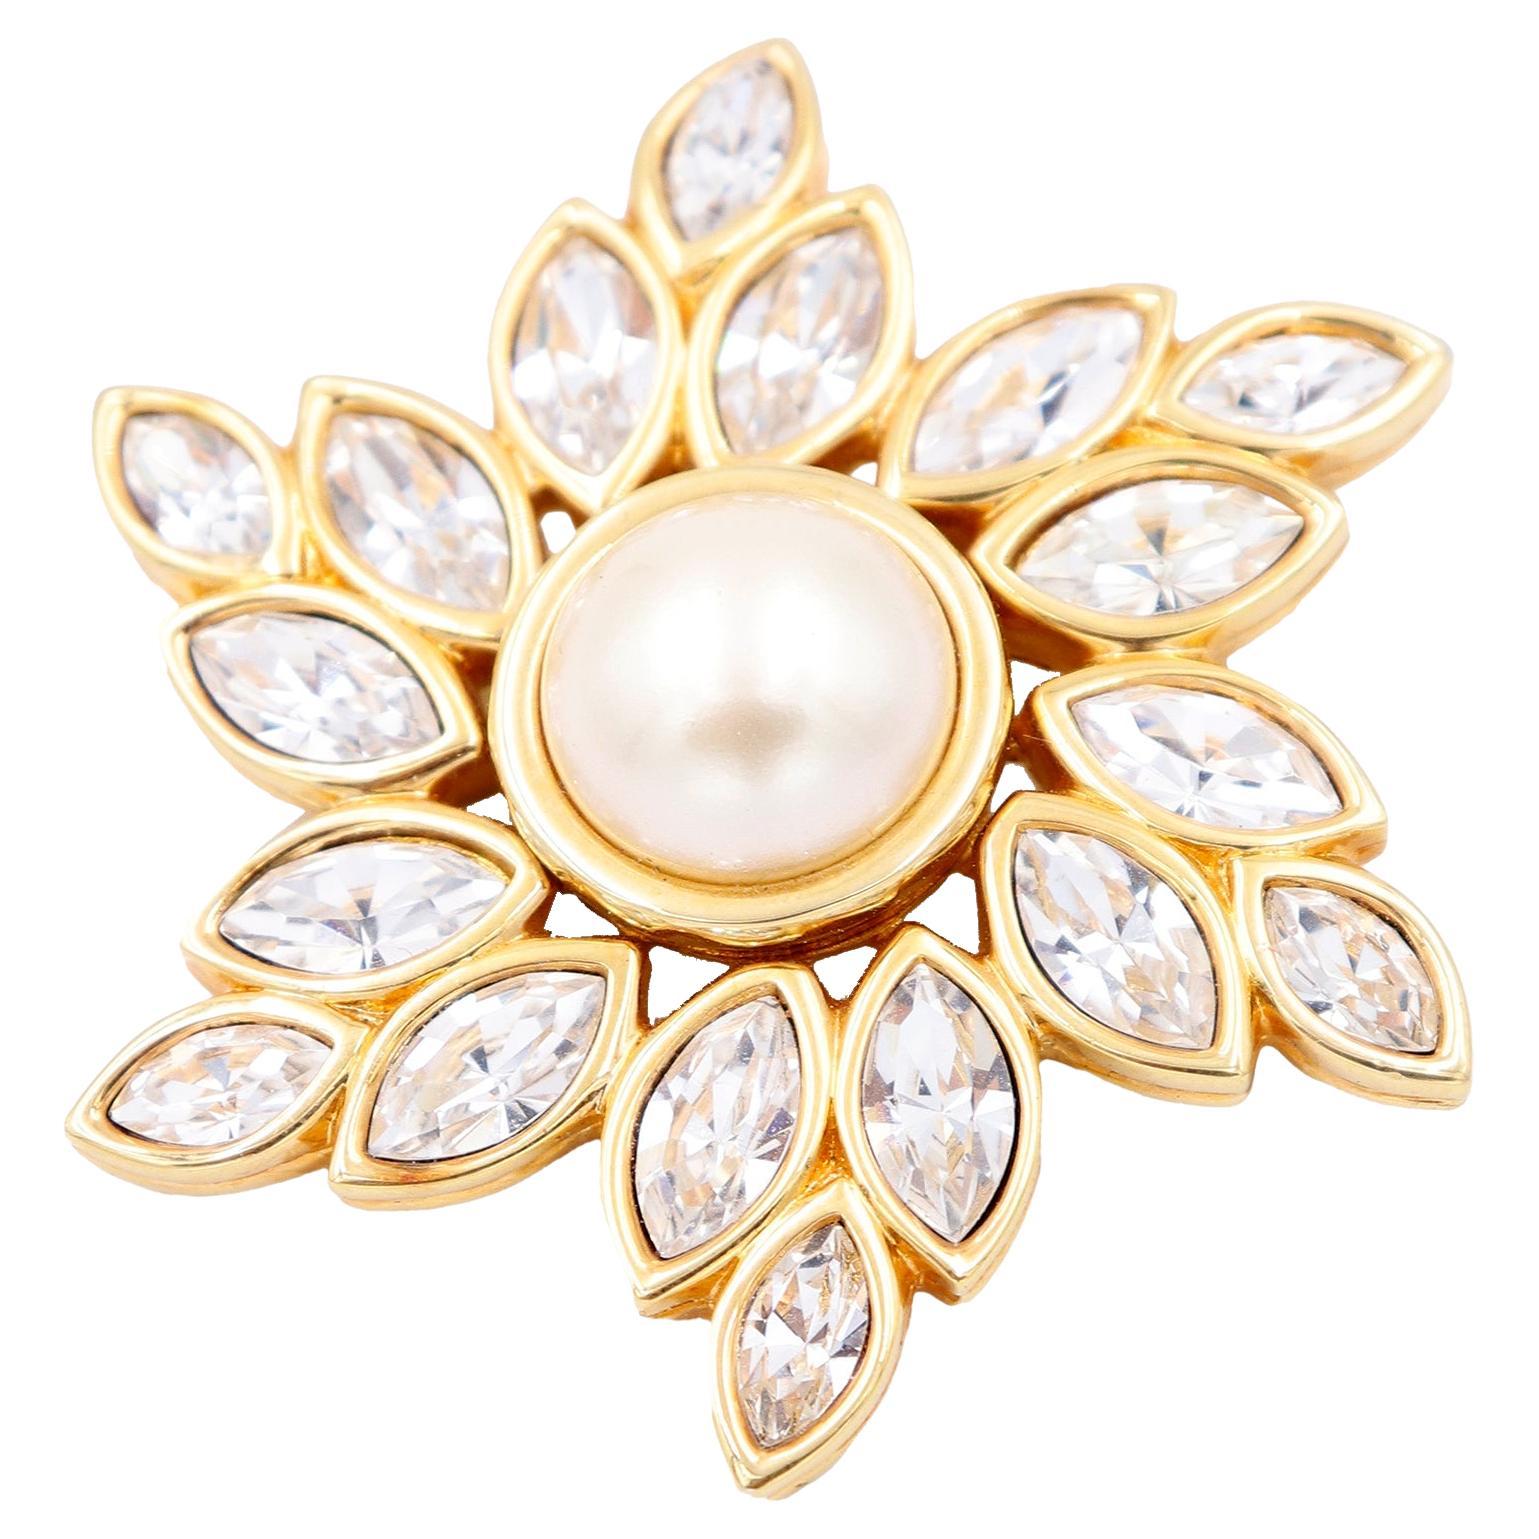 Swarovski Crystal Gold Plate Star Flower Brooch with SAL hallmark